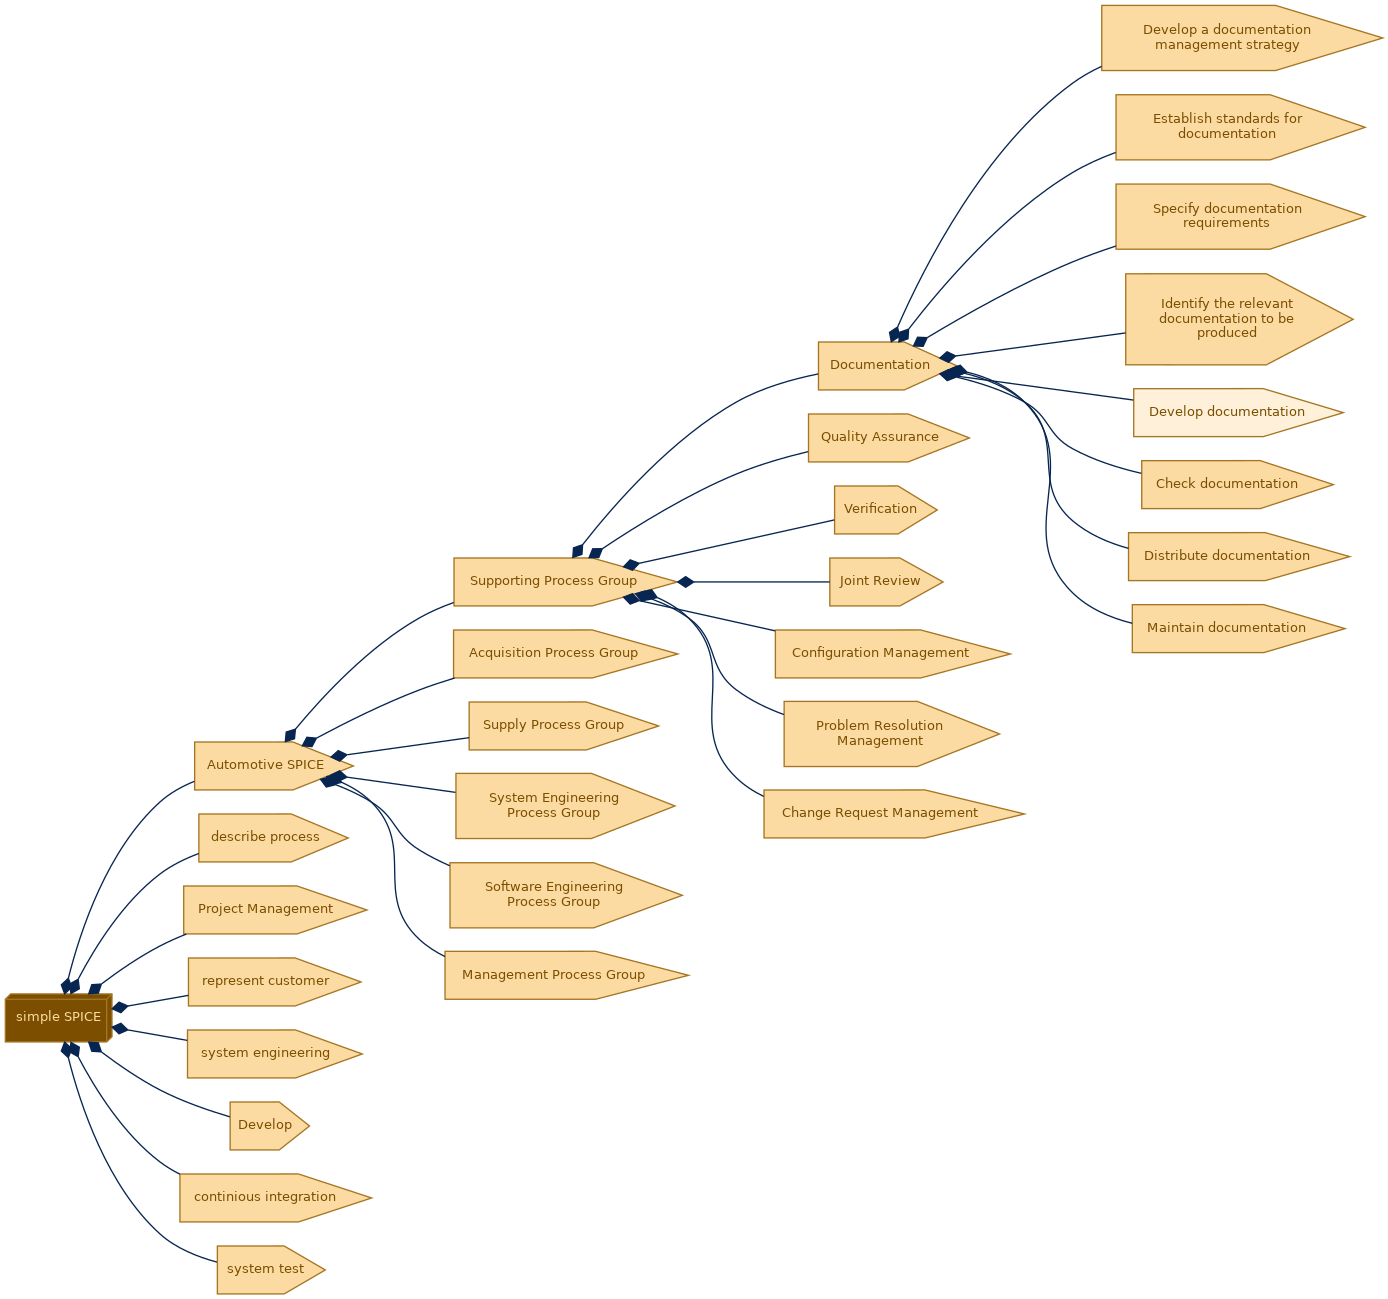 spem diagram of the activity breakdown: Develop documentation